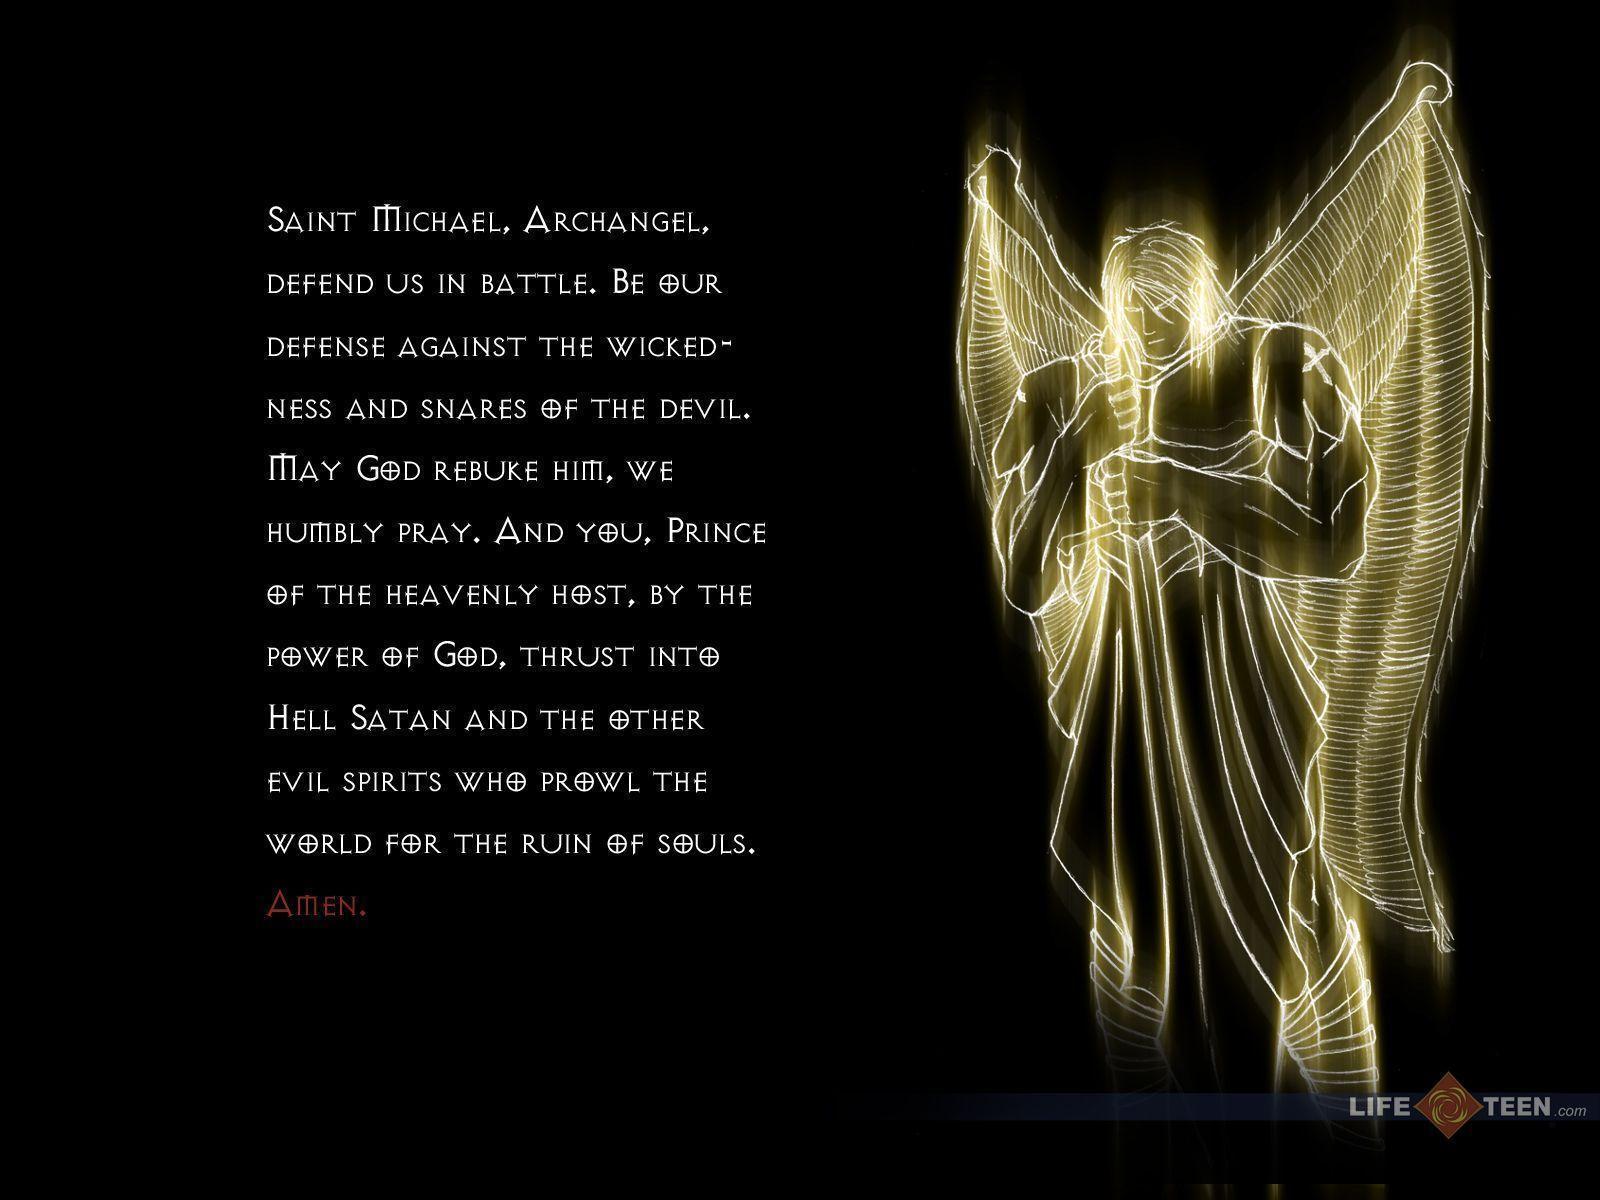 Prayer to St. Michael Archangel